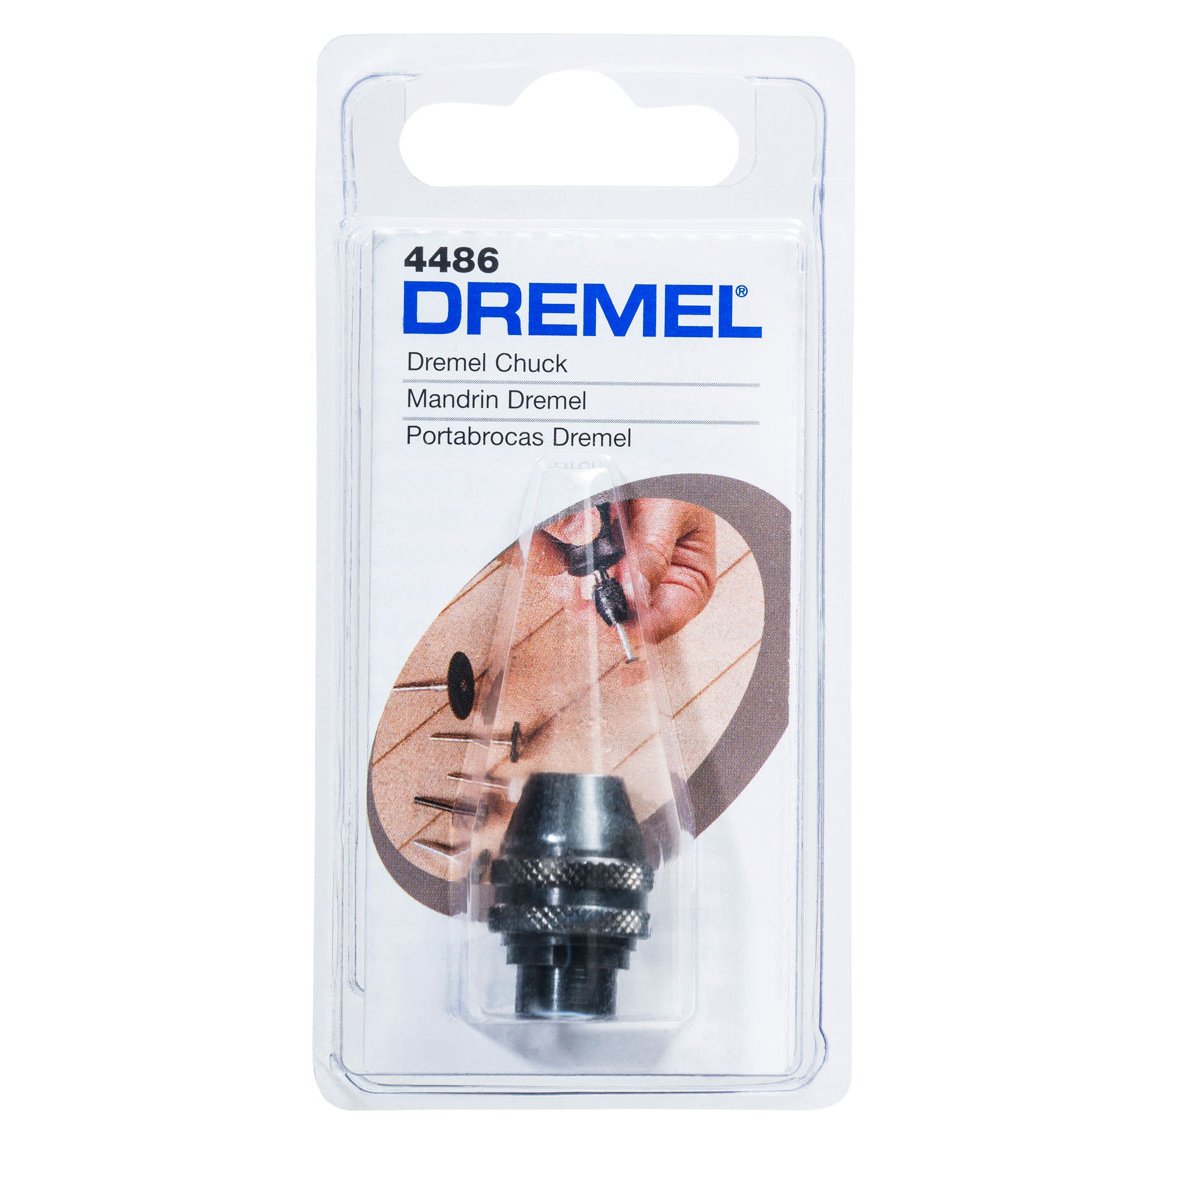 Combo Dremel Multipro 3000 + 26 Accesorios + Grabador 290 - 1619R3290S  Dremel